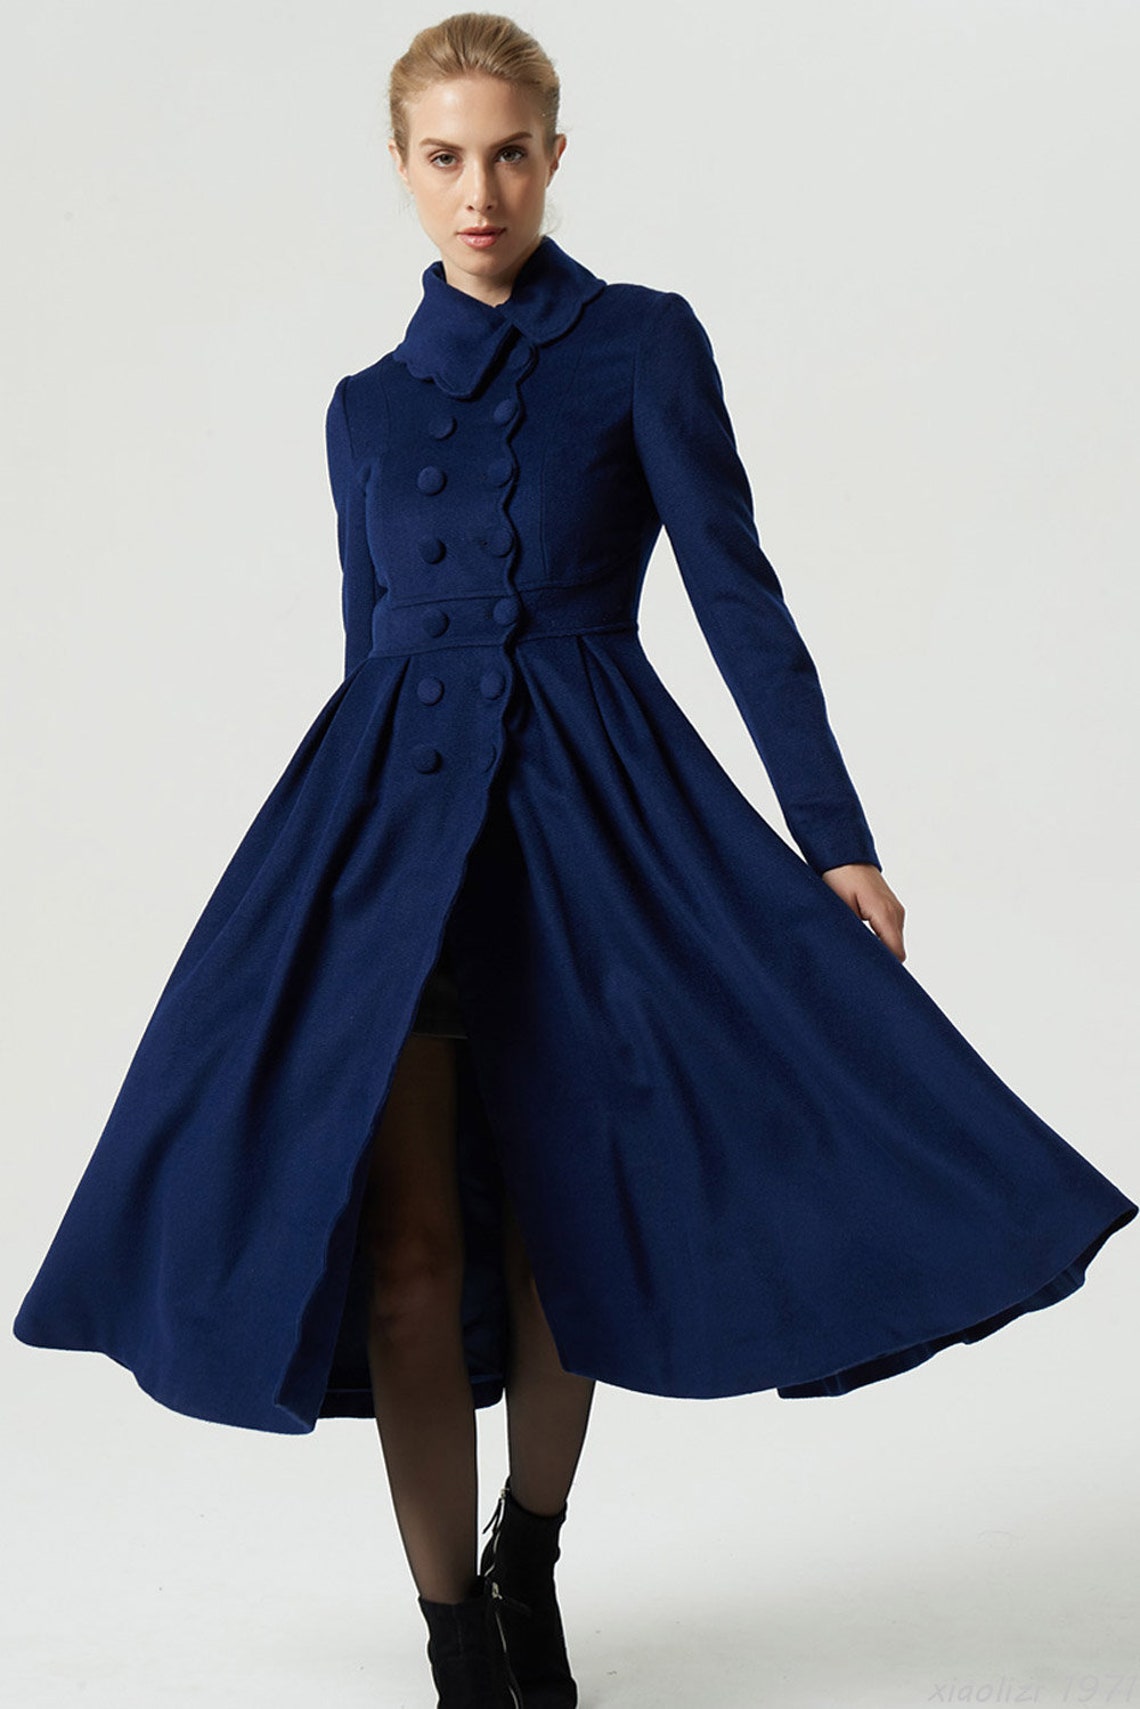 Double-breasted wool princess coat 1940s swing coat winter | Etsy